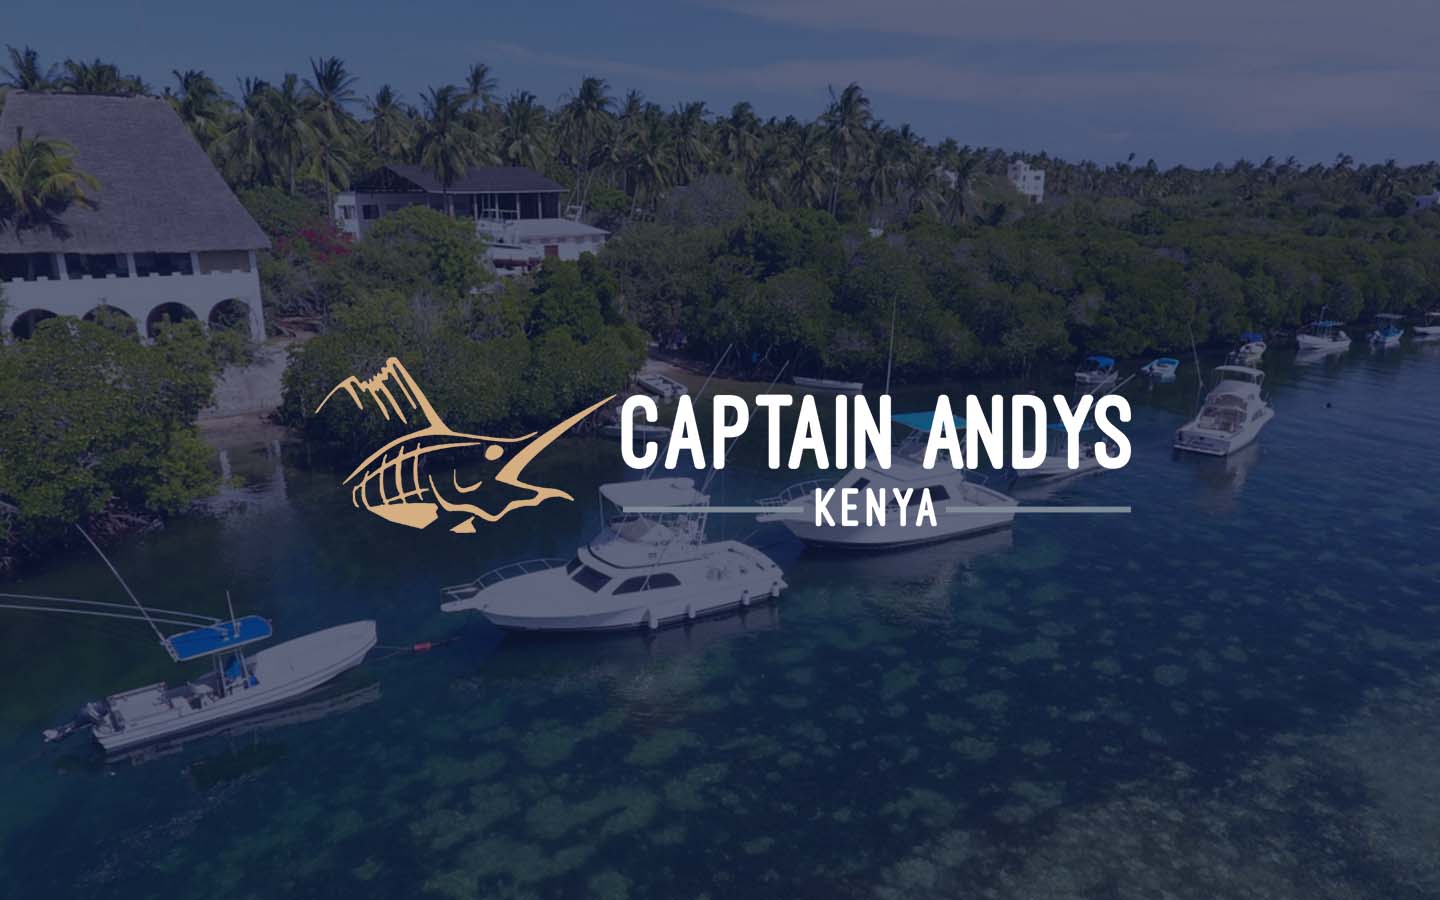 Fewer anglers but billfish being caught. - Captains Andys Kenya - captain andys kenya 6